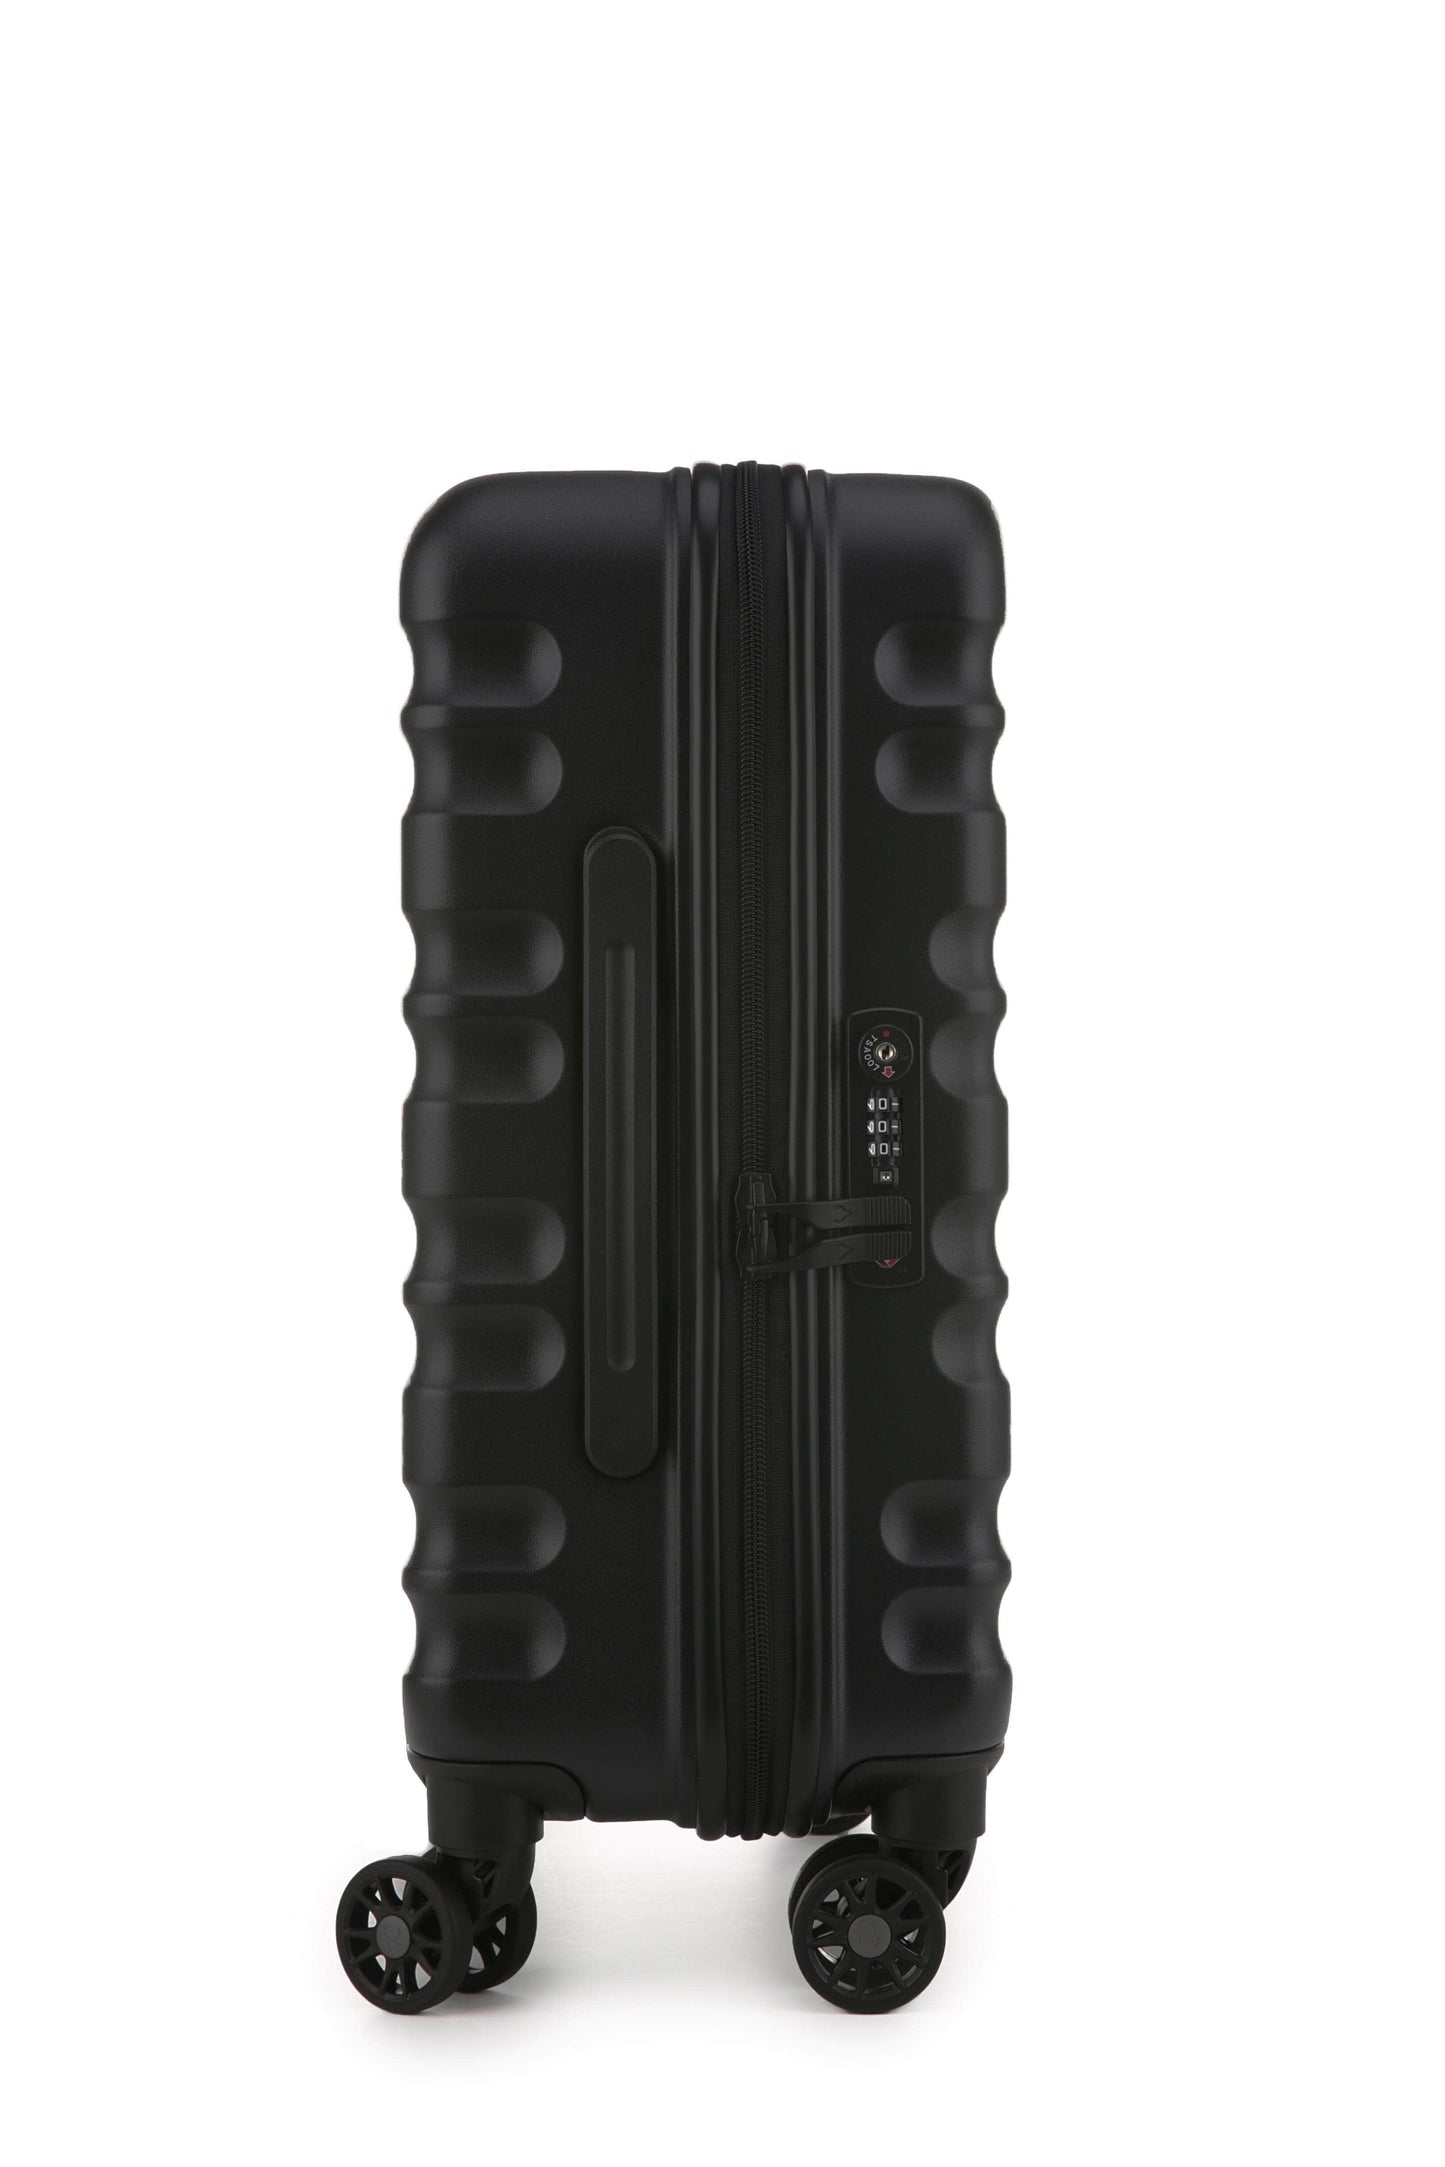 Antler Luggage -  Clifton cabin in black - Hard Suitcases Clifton Monos 55x40x20cm Cabin Suitcase Black | Hard Suitcase | Antler UK